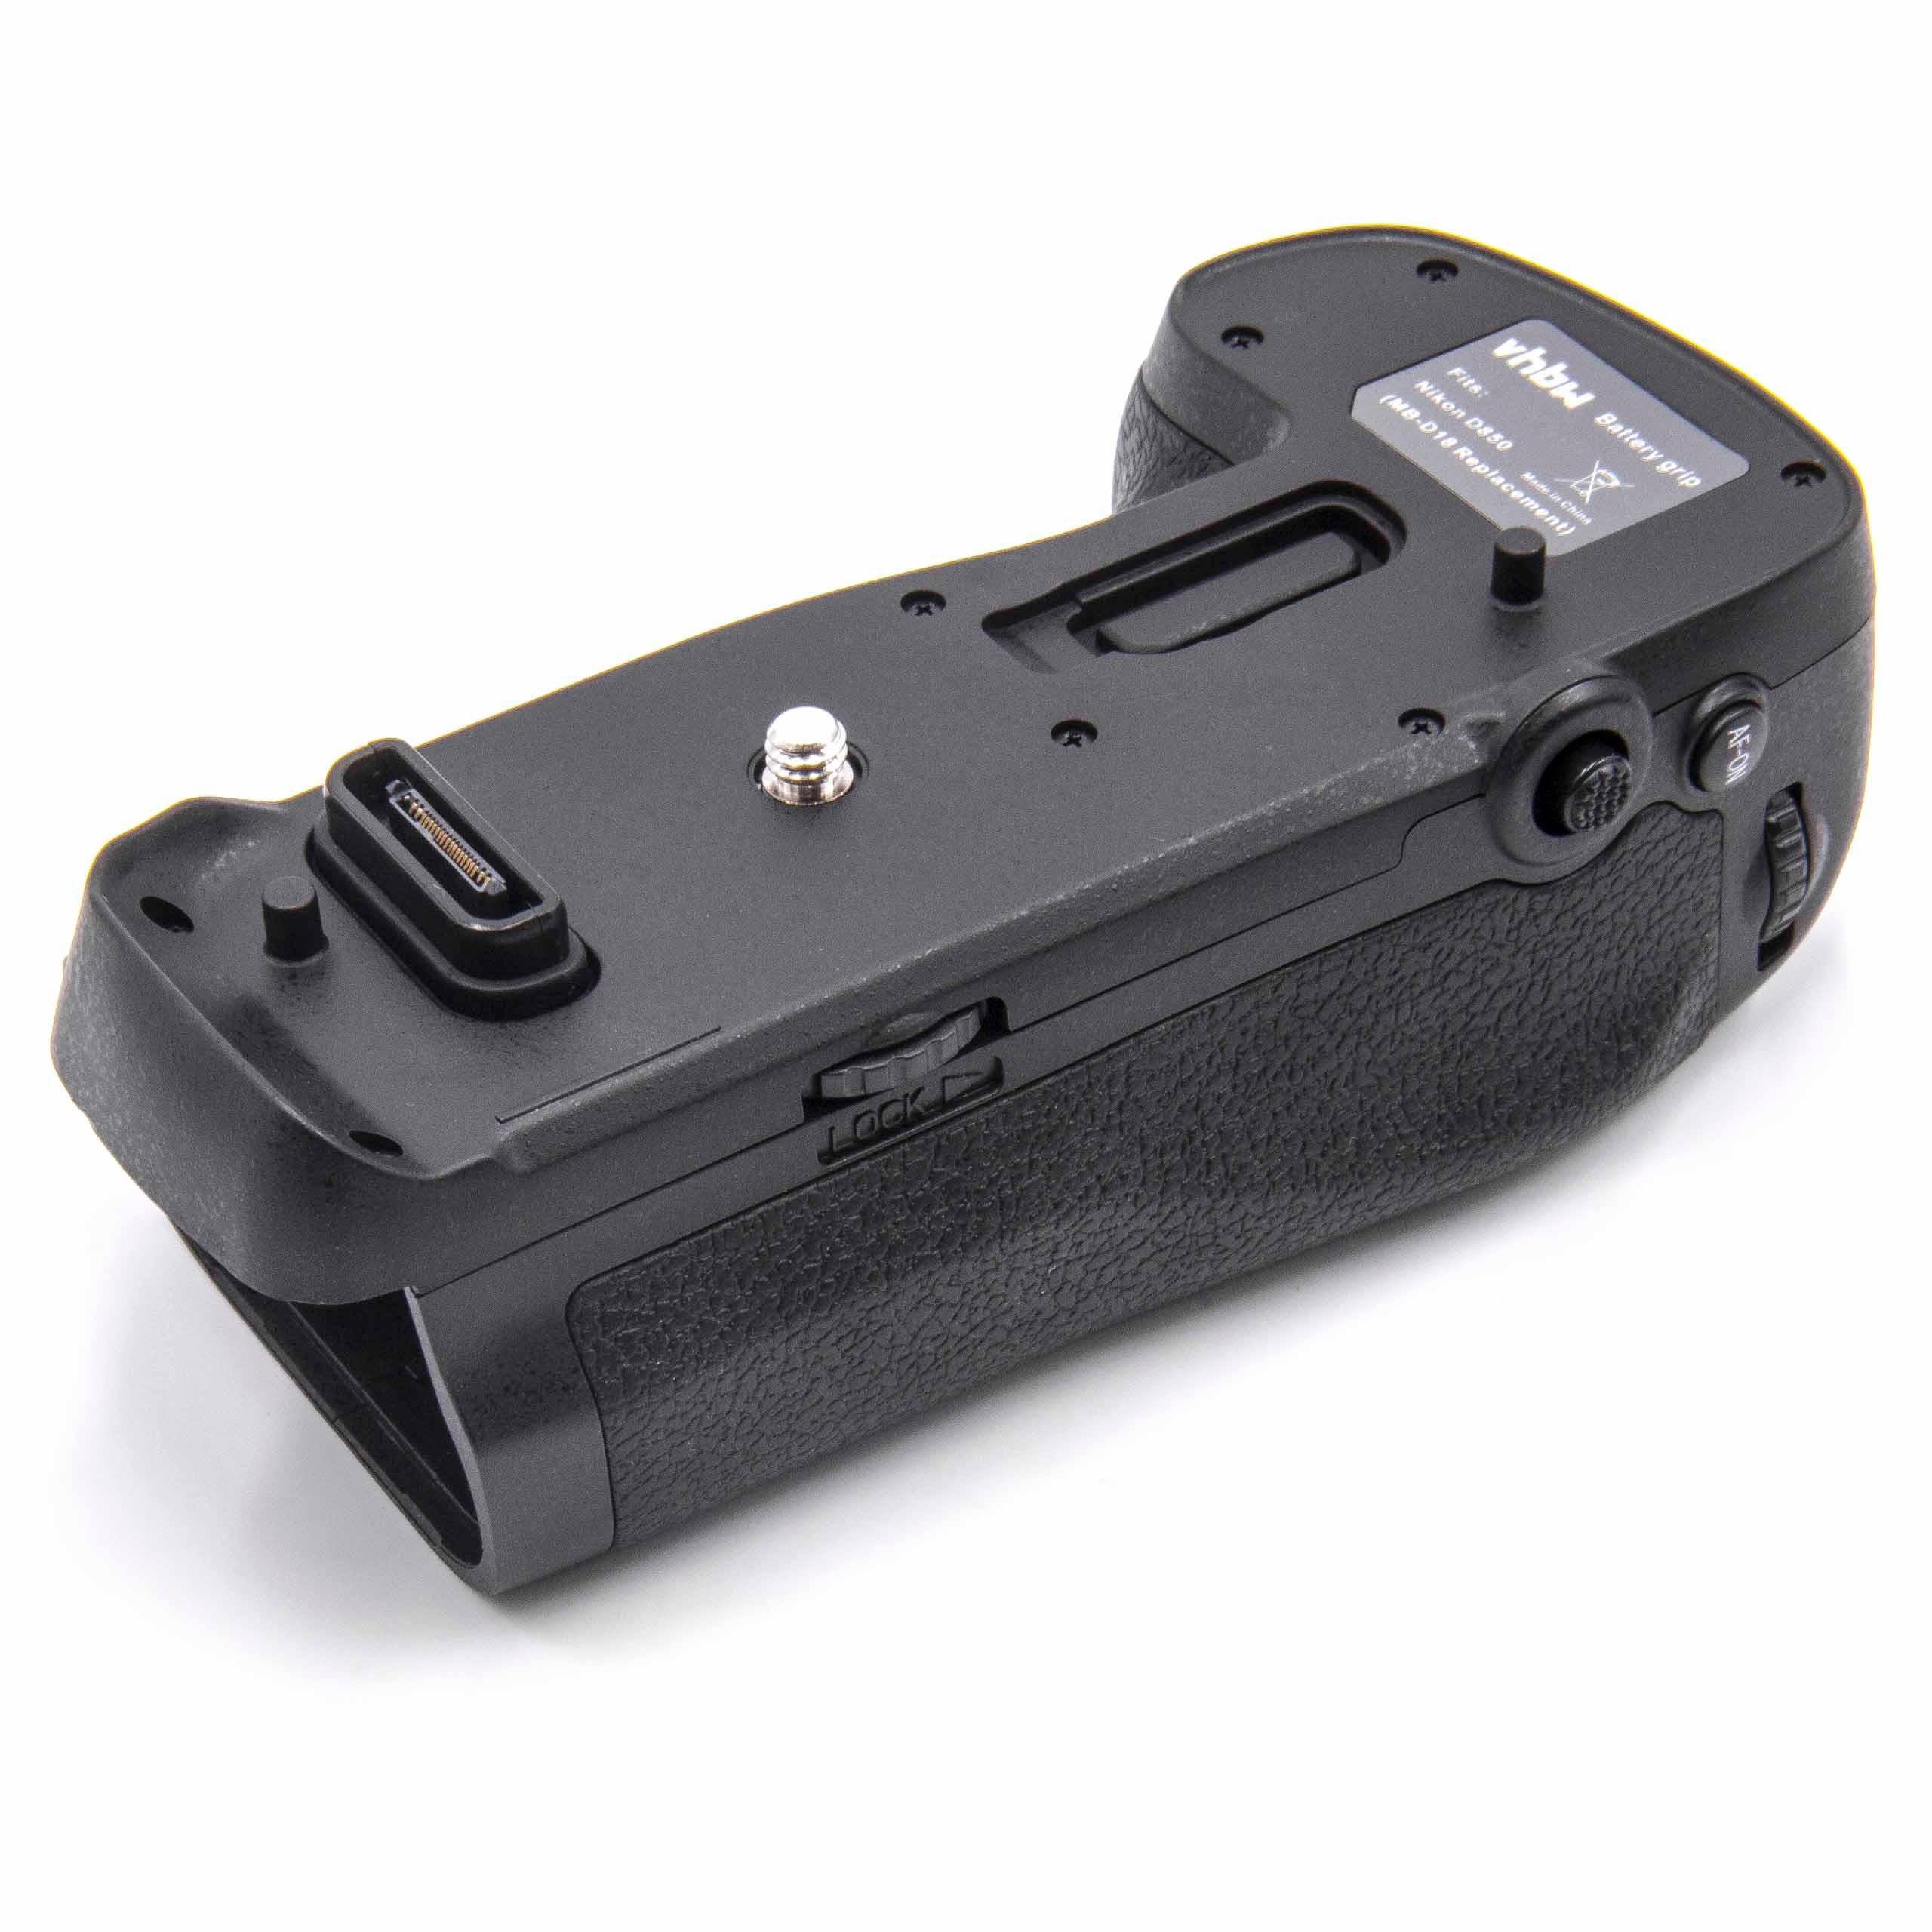 Empuñadura de batería reemplaza Nikon MB-D18 para camara Nikon - incl. rueda selectora